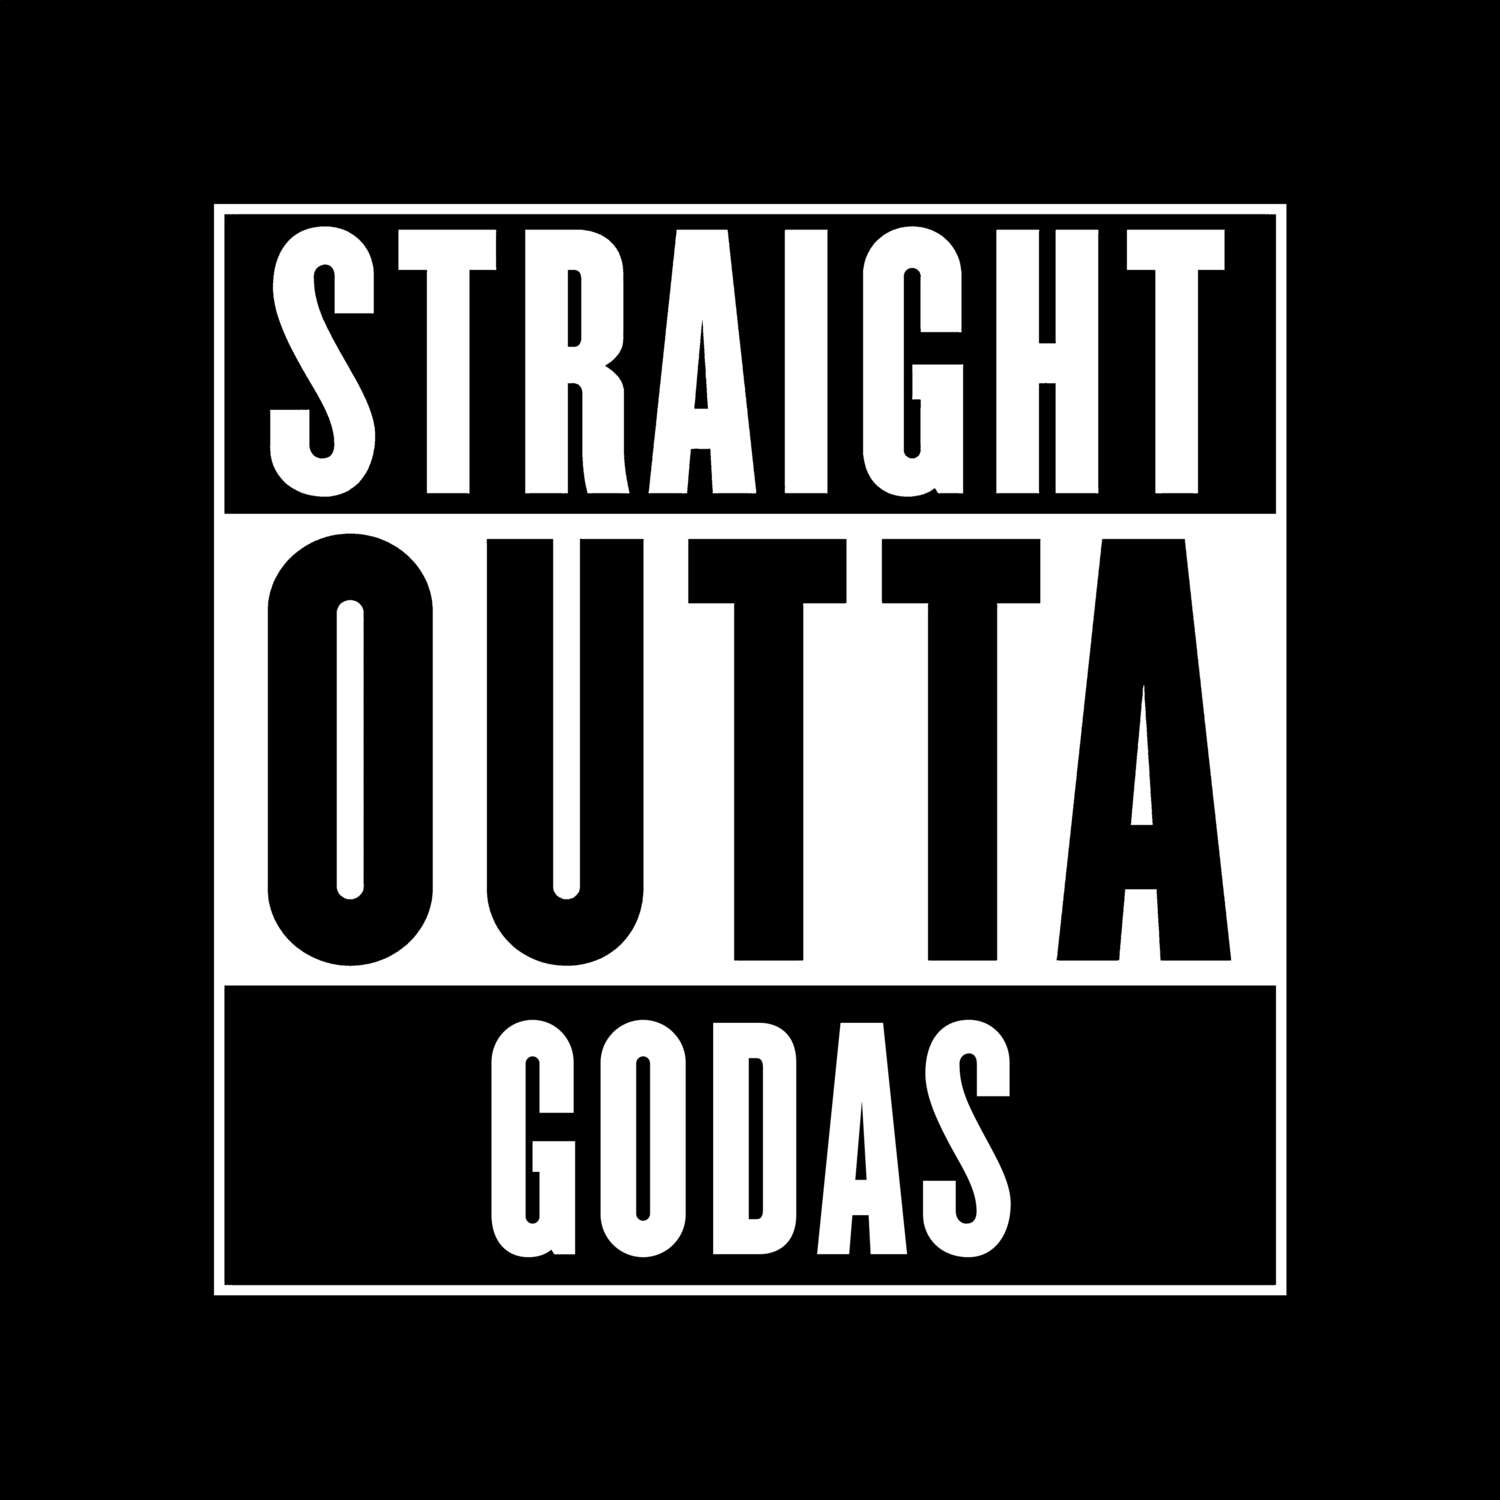 Godas T-Shirt »Straight Outta«